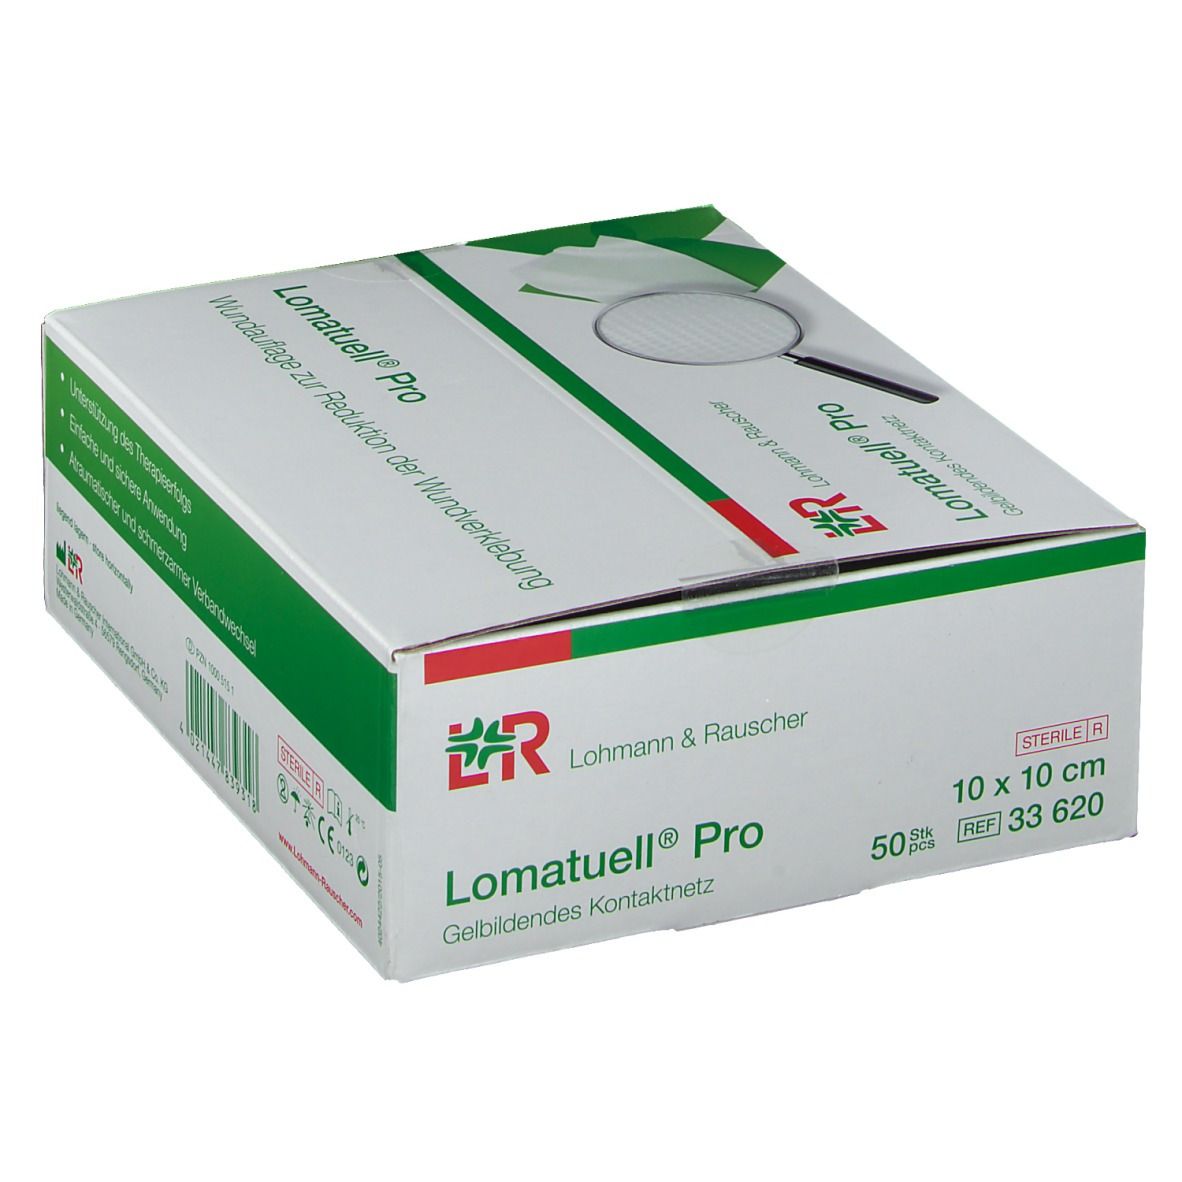 Lomatuell® Pro 10 cm x 10 cm steril